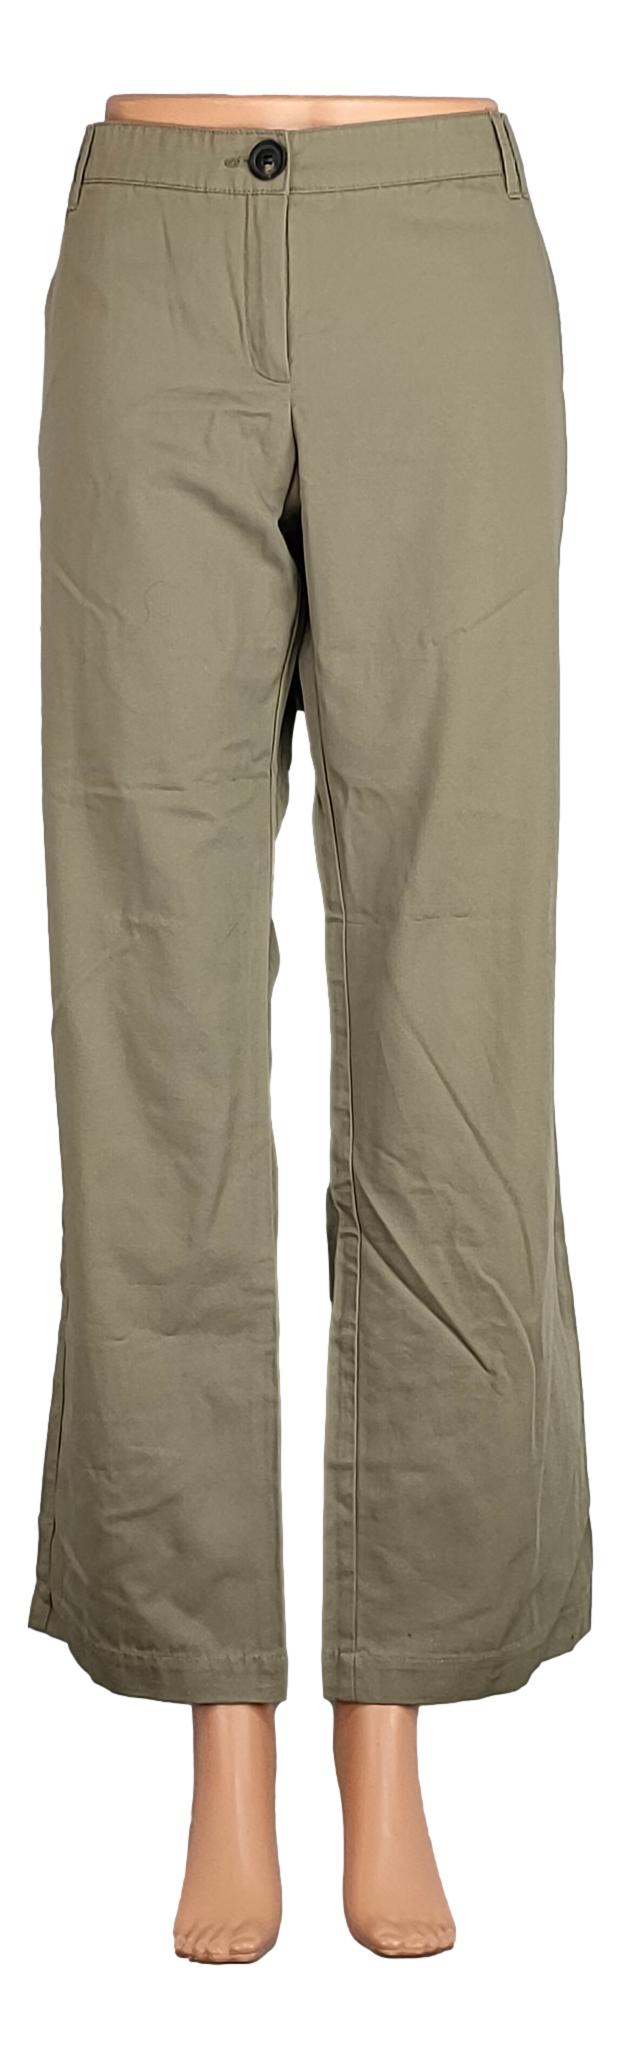 Pantalon MNG - Taille 42